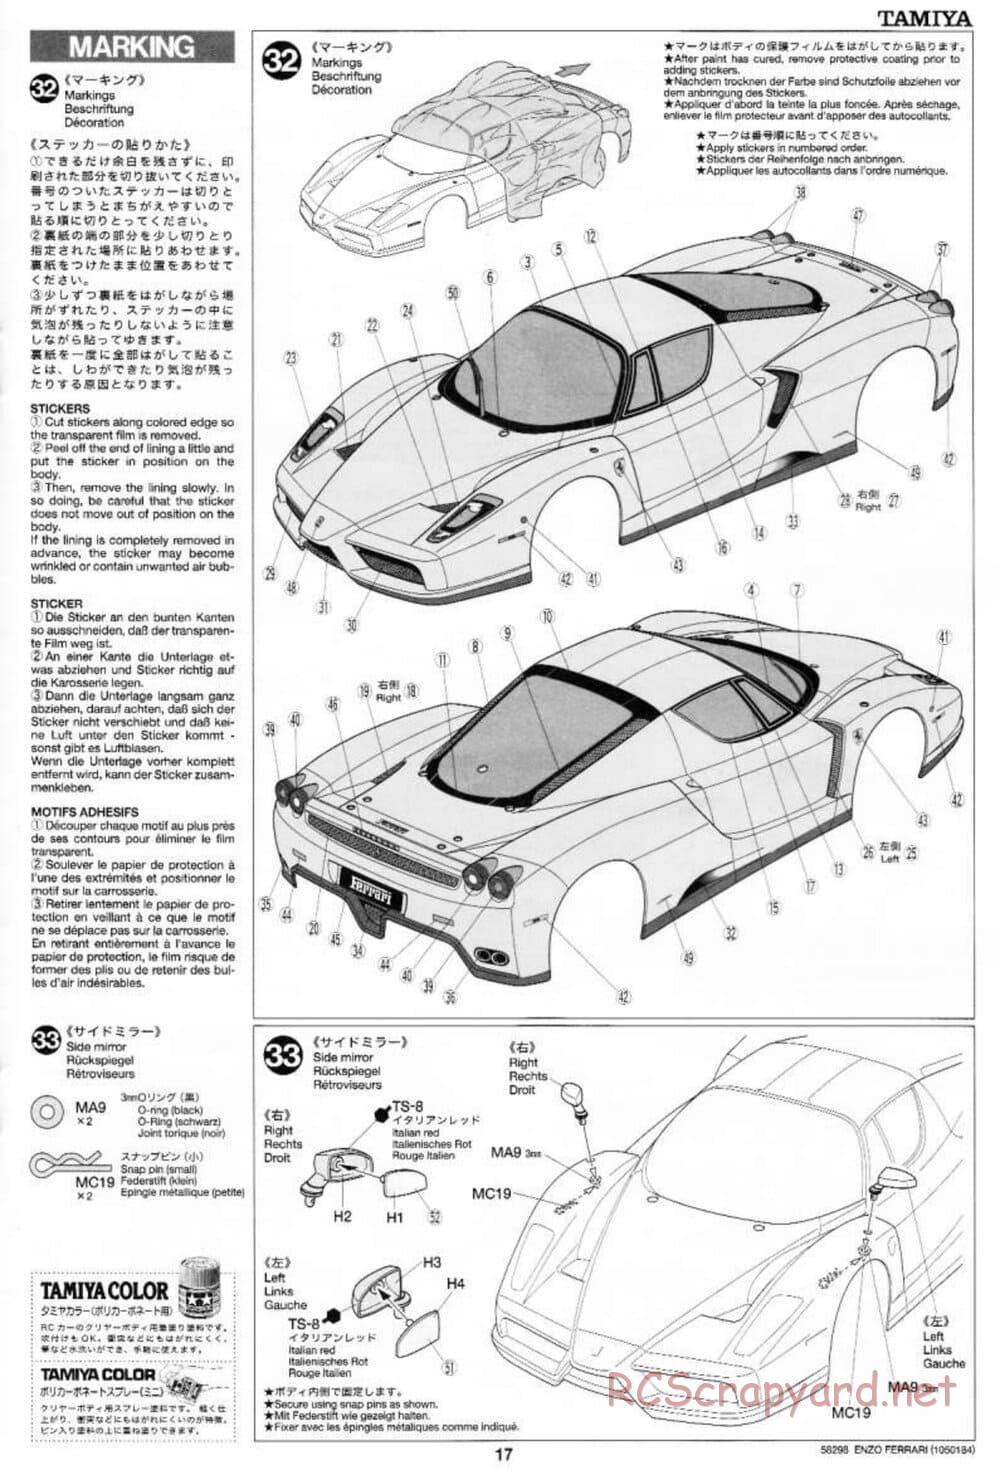 Tamiya - Enzo Ferrari - TB-01 Chassis - Manual - Page 17